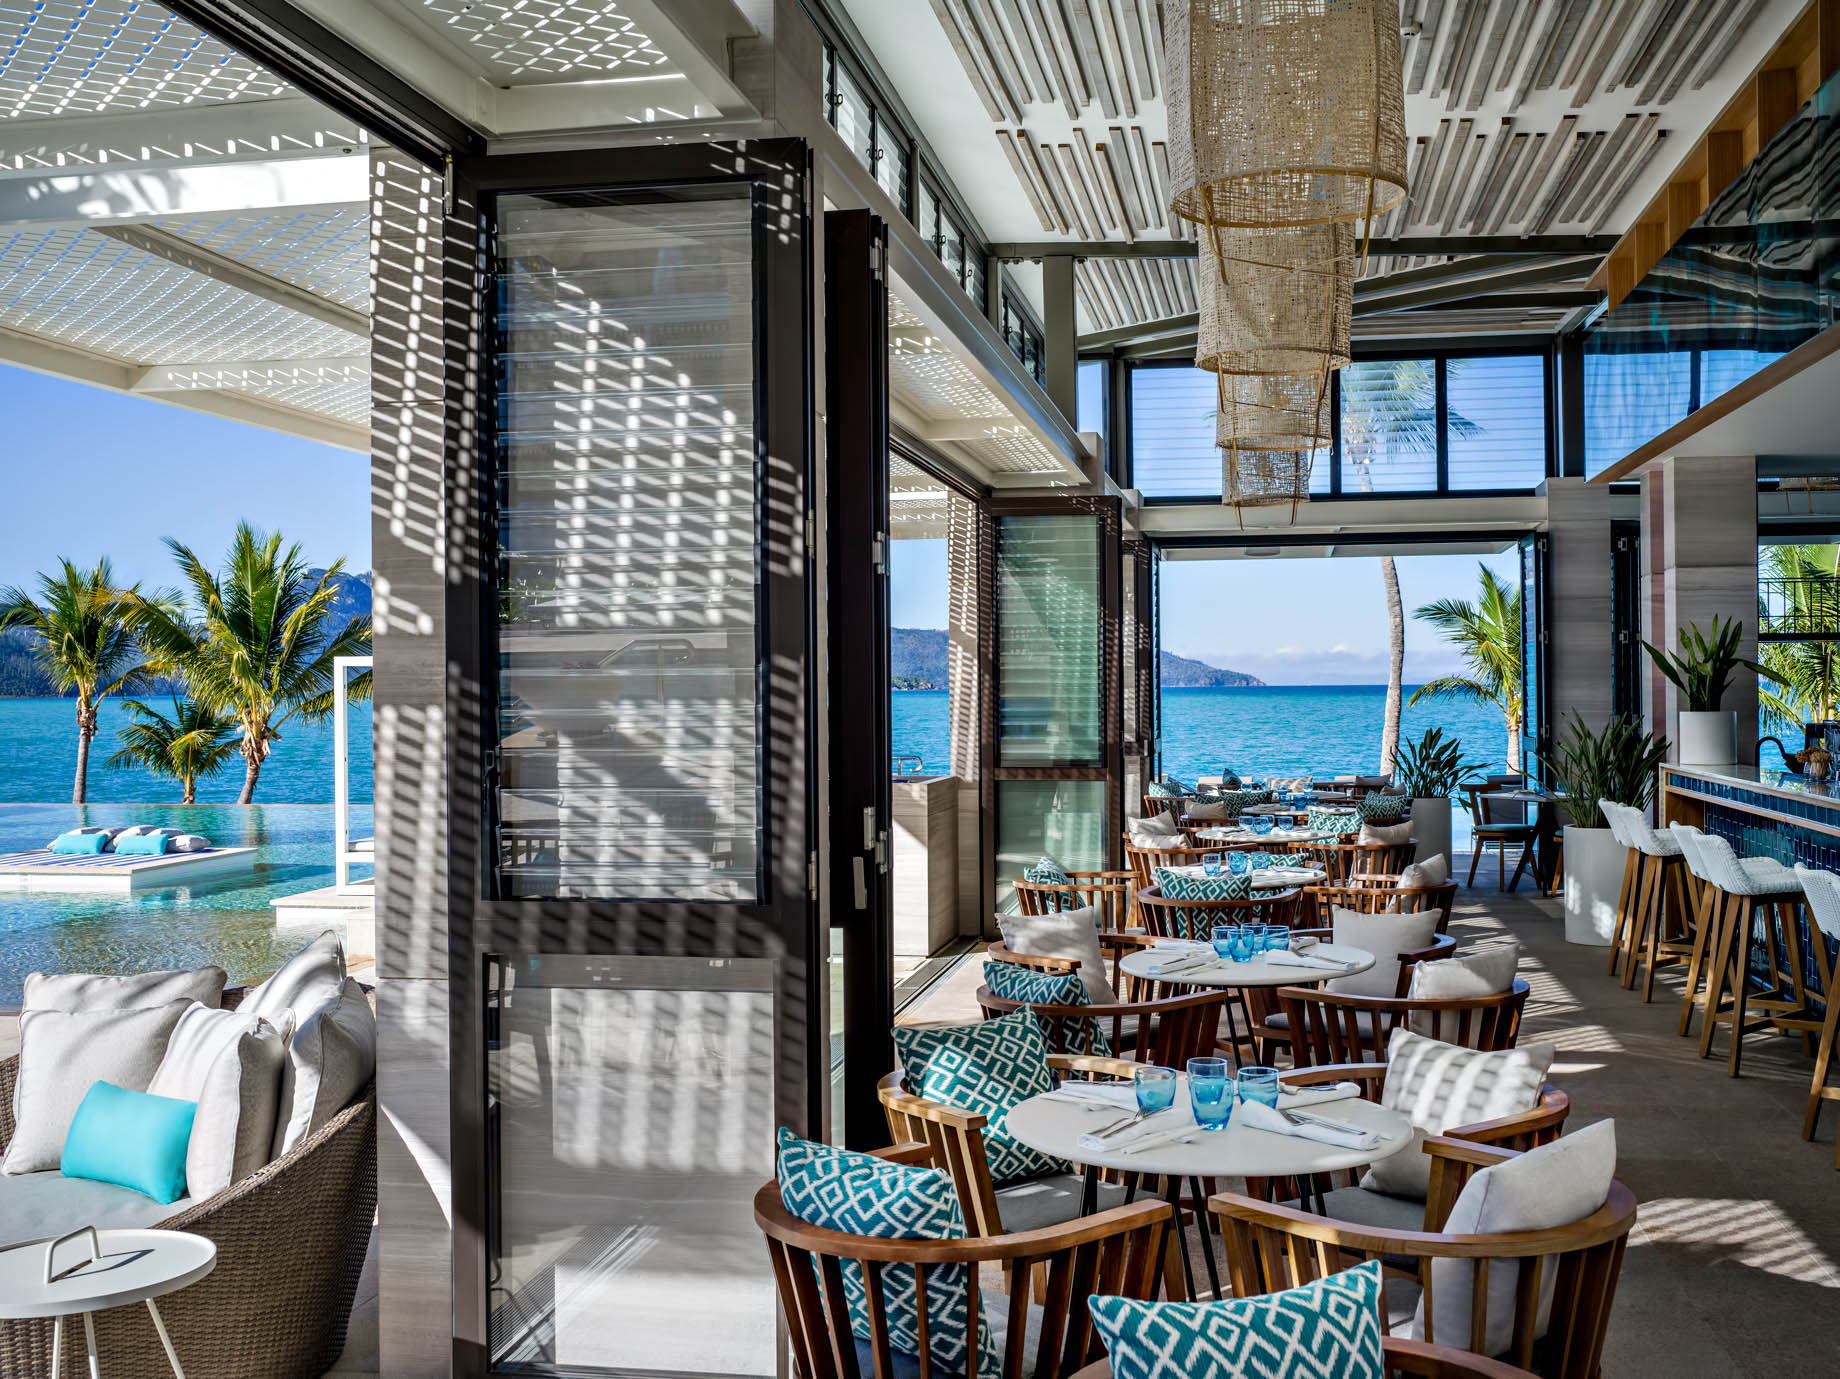 InterContinental Hayman Island Resort – Whitsunday Islands, Australia – Bam Bam Restaurant